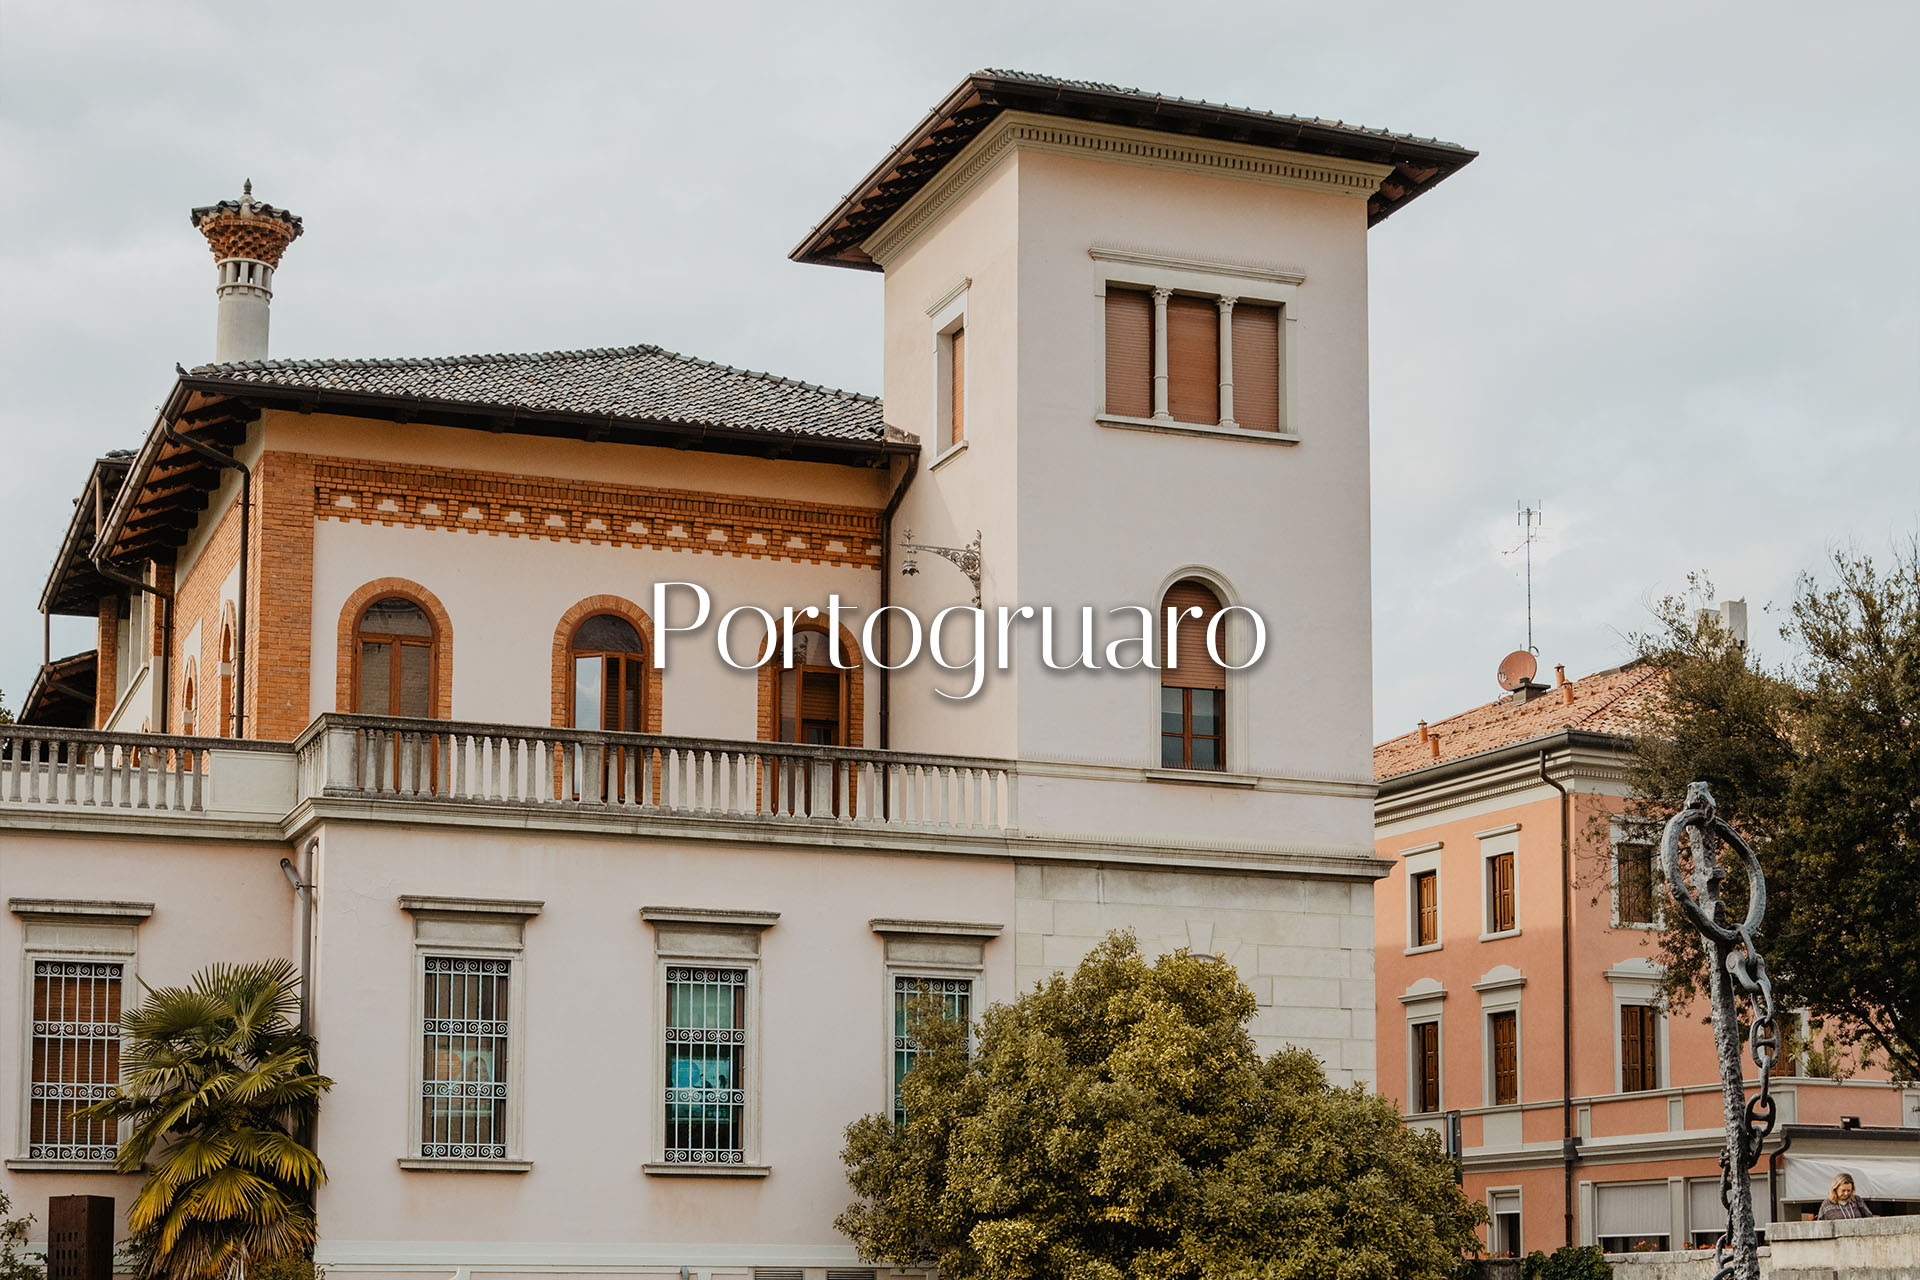 Portogruaro and its surroundings